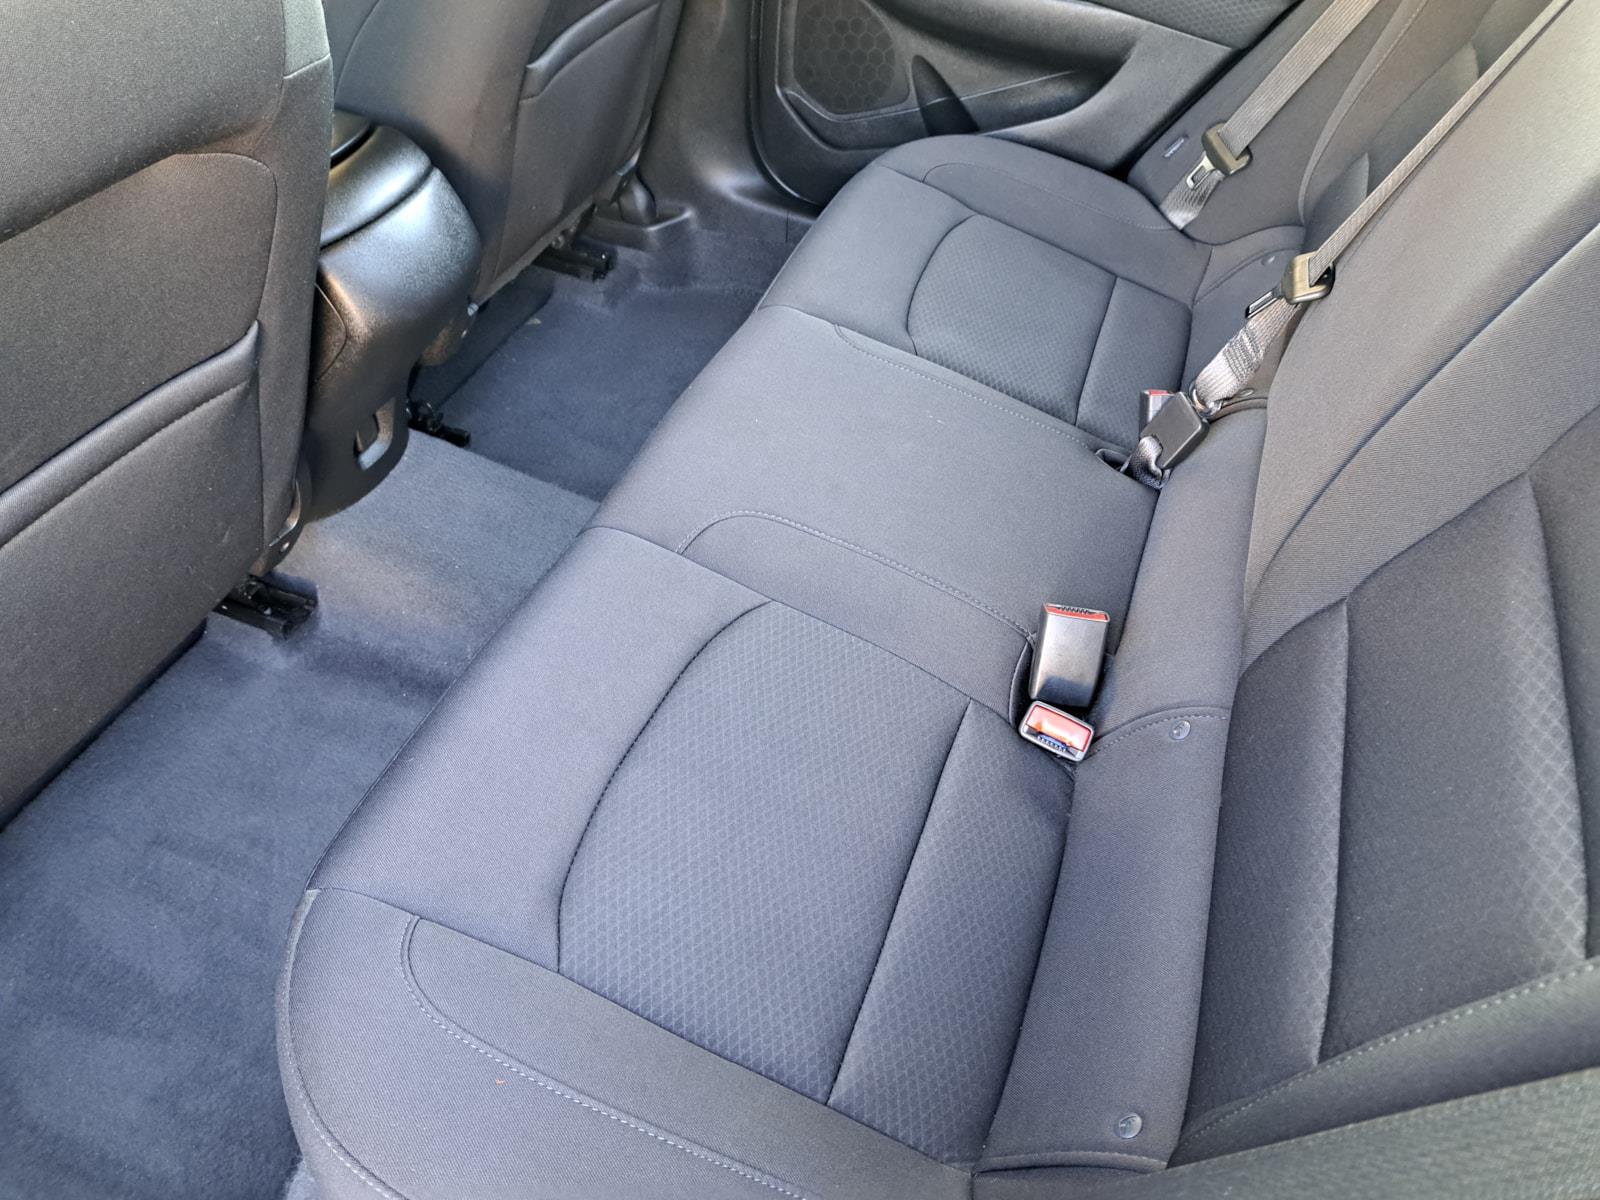 2019 Chevrolet Malibu RS Sedan 4 Dr. Front Wheel Drive 26